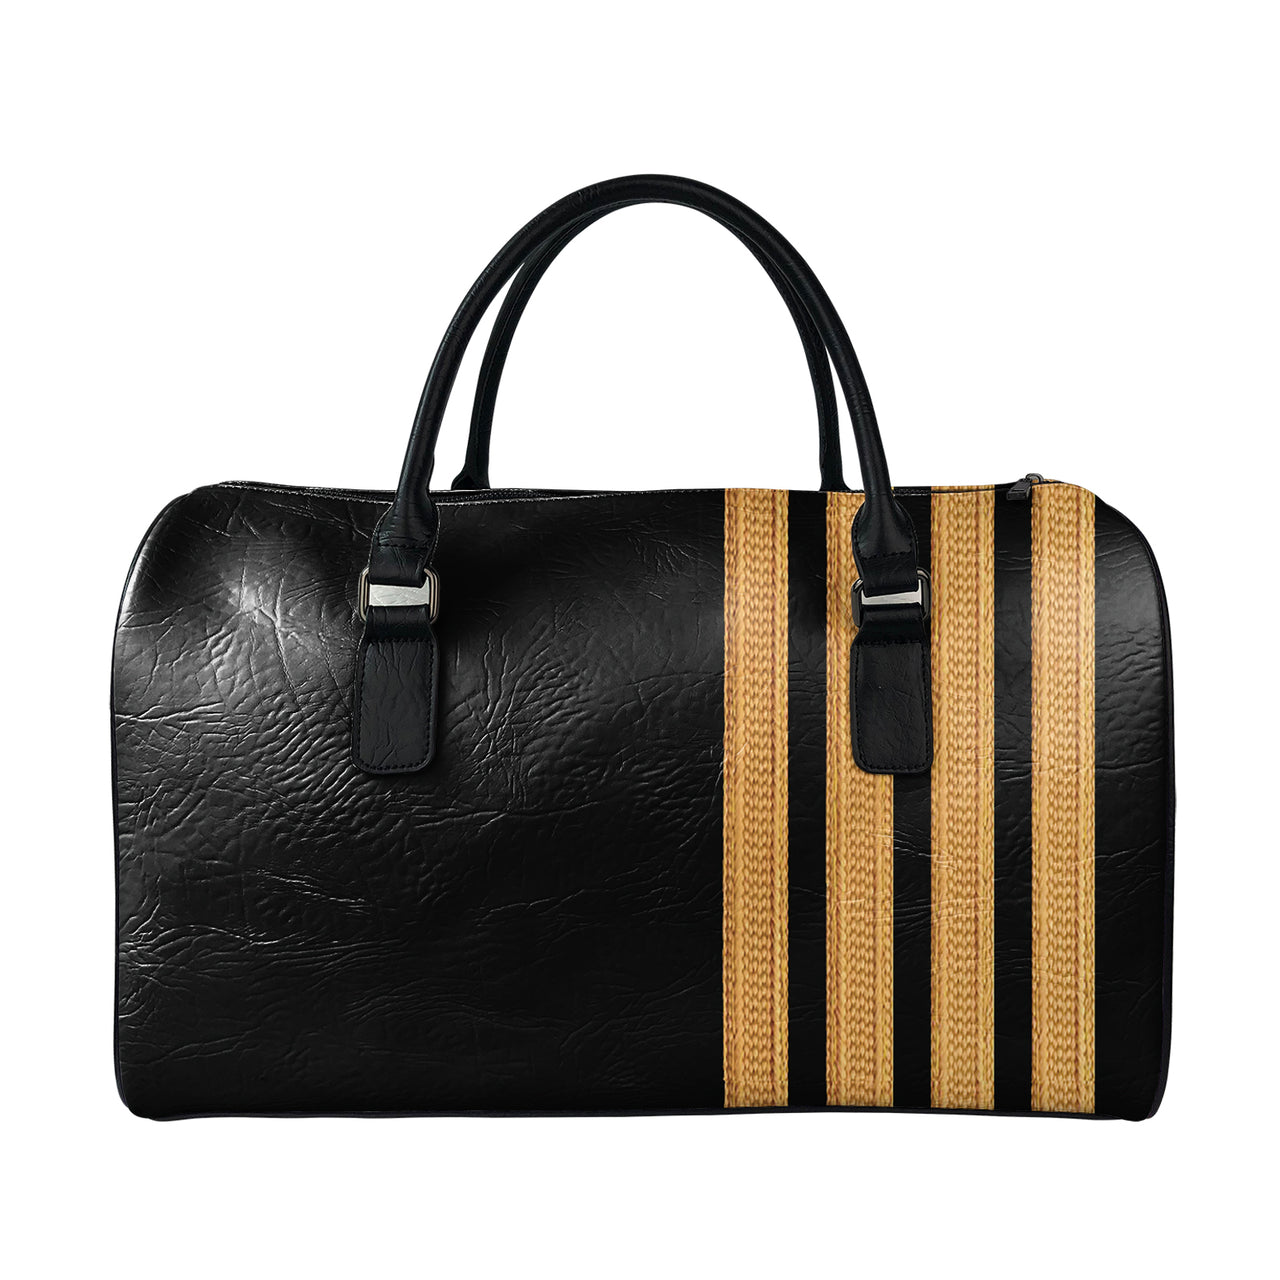 Special Golden Epaulettes (4,3,2 Lines) Designed Leather Travel Bag